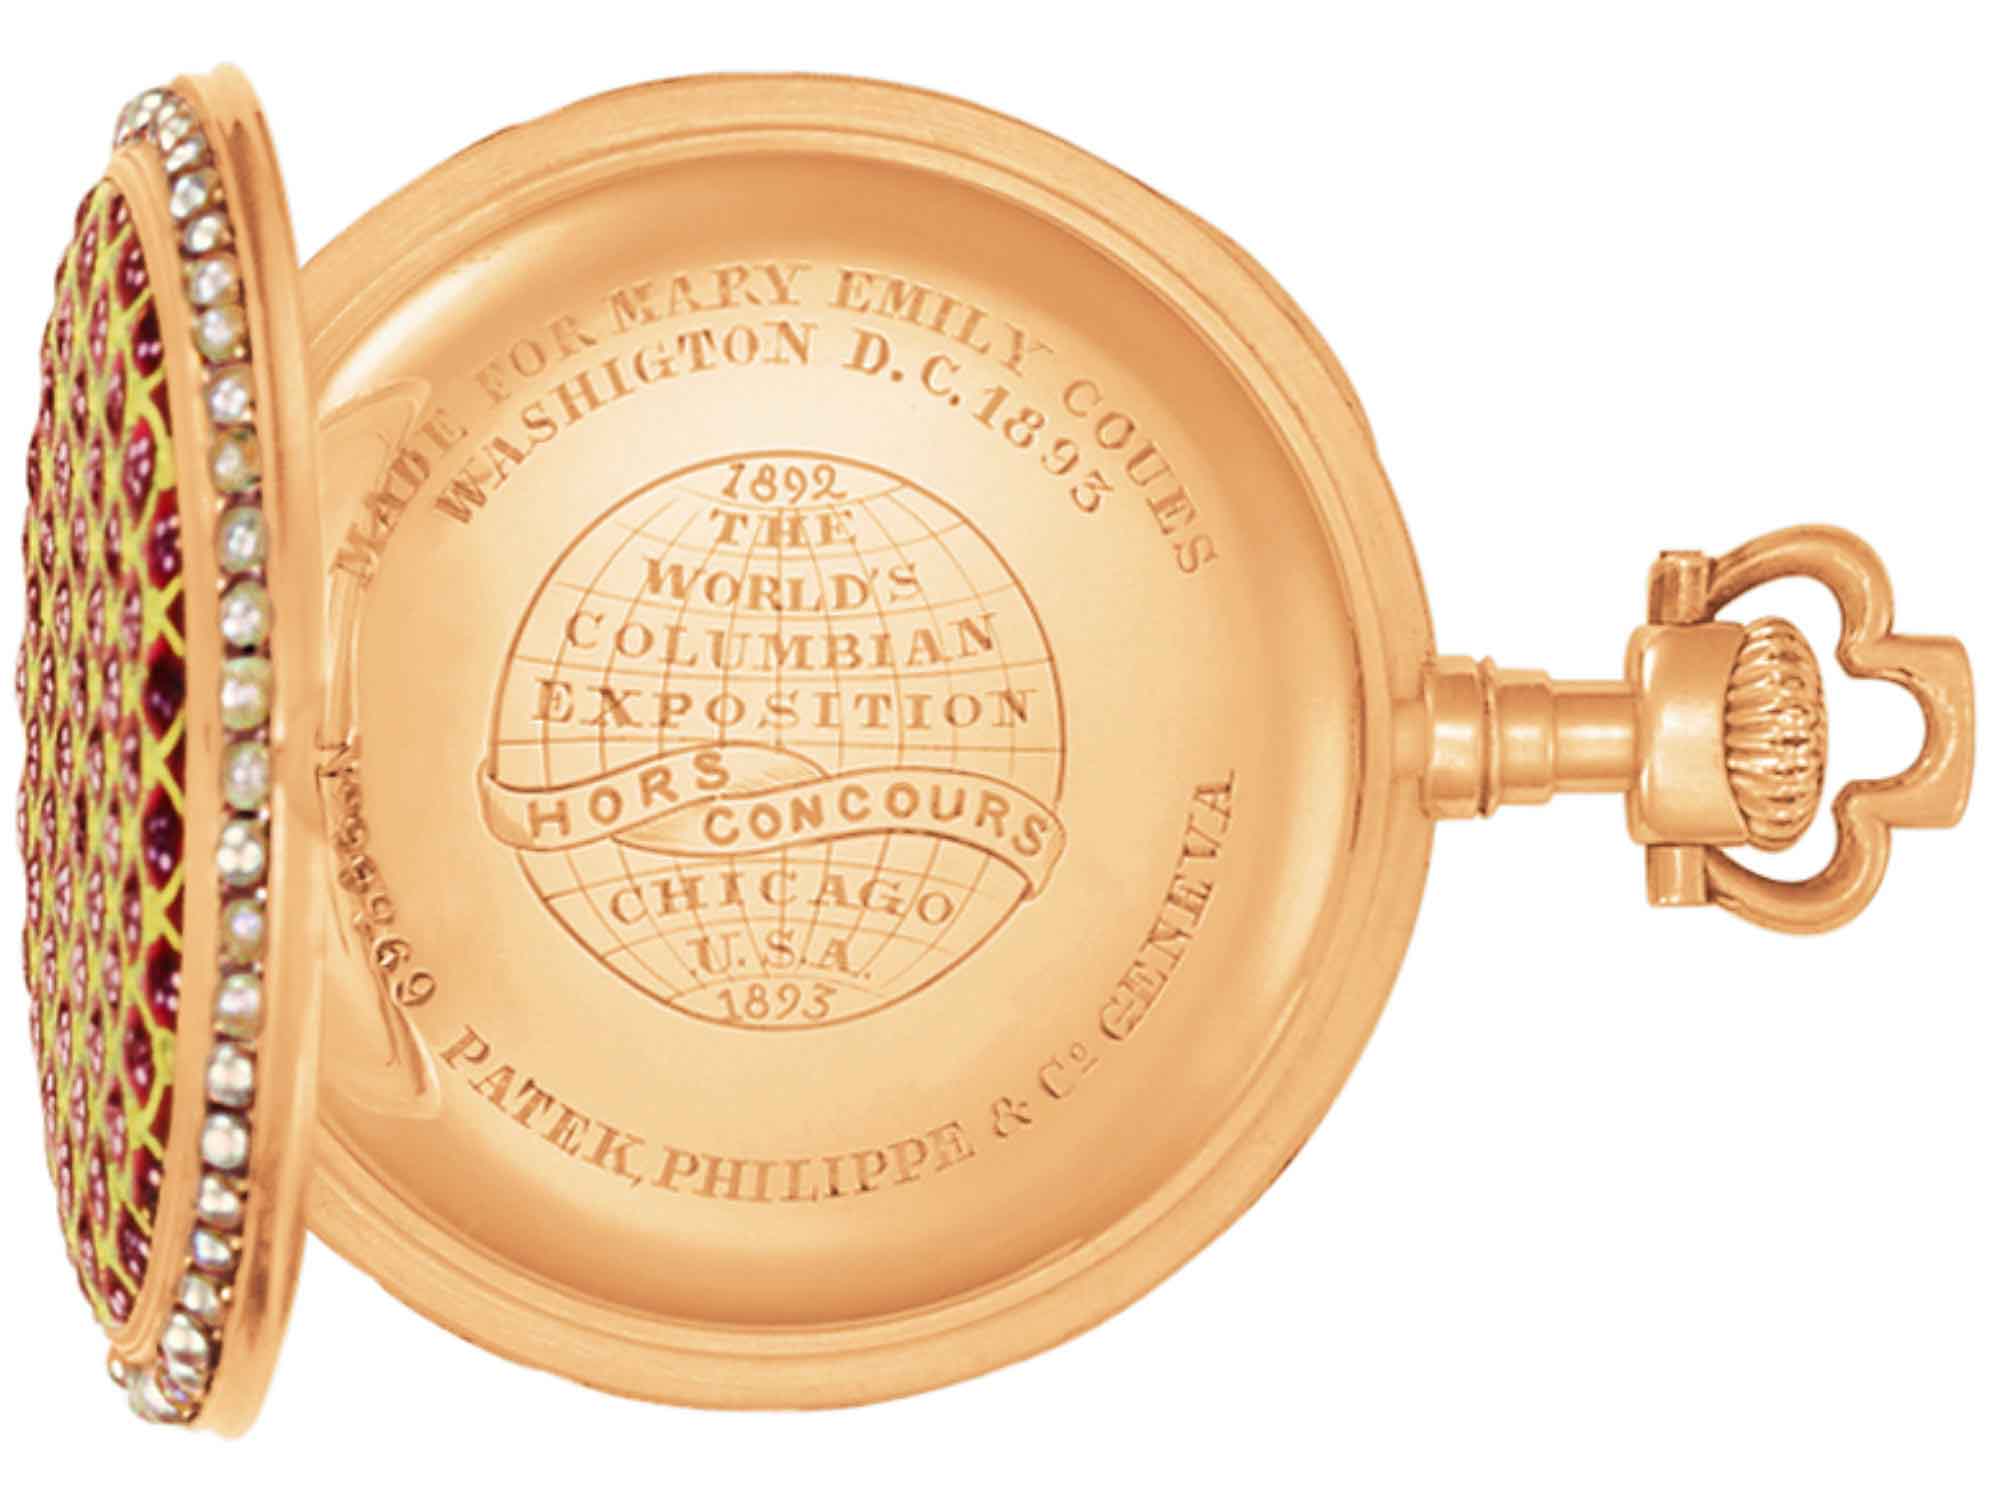 Patek, Philippe & Cie, Geneva vintage rose gold watch case no. 211548